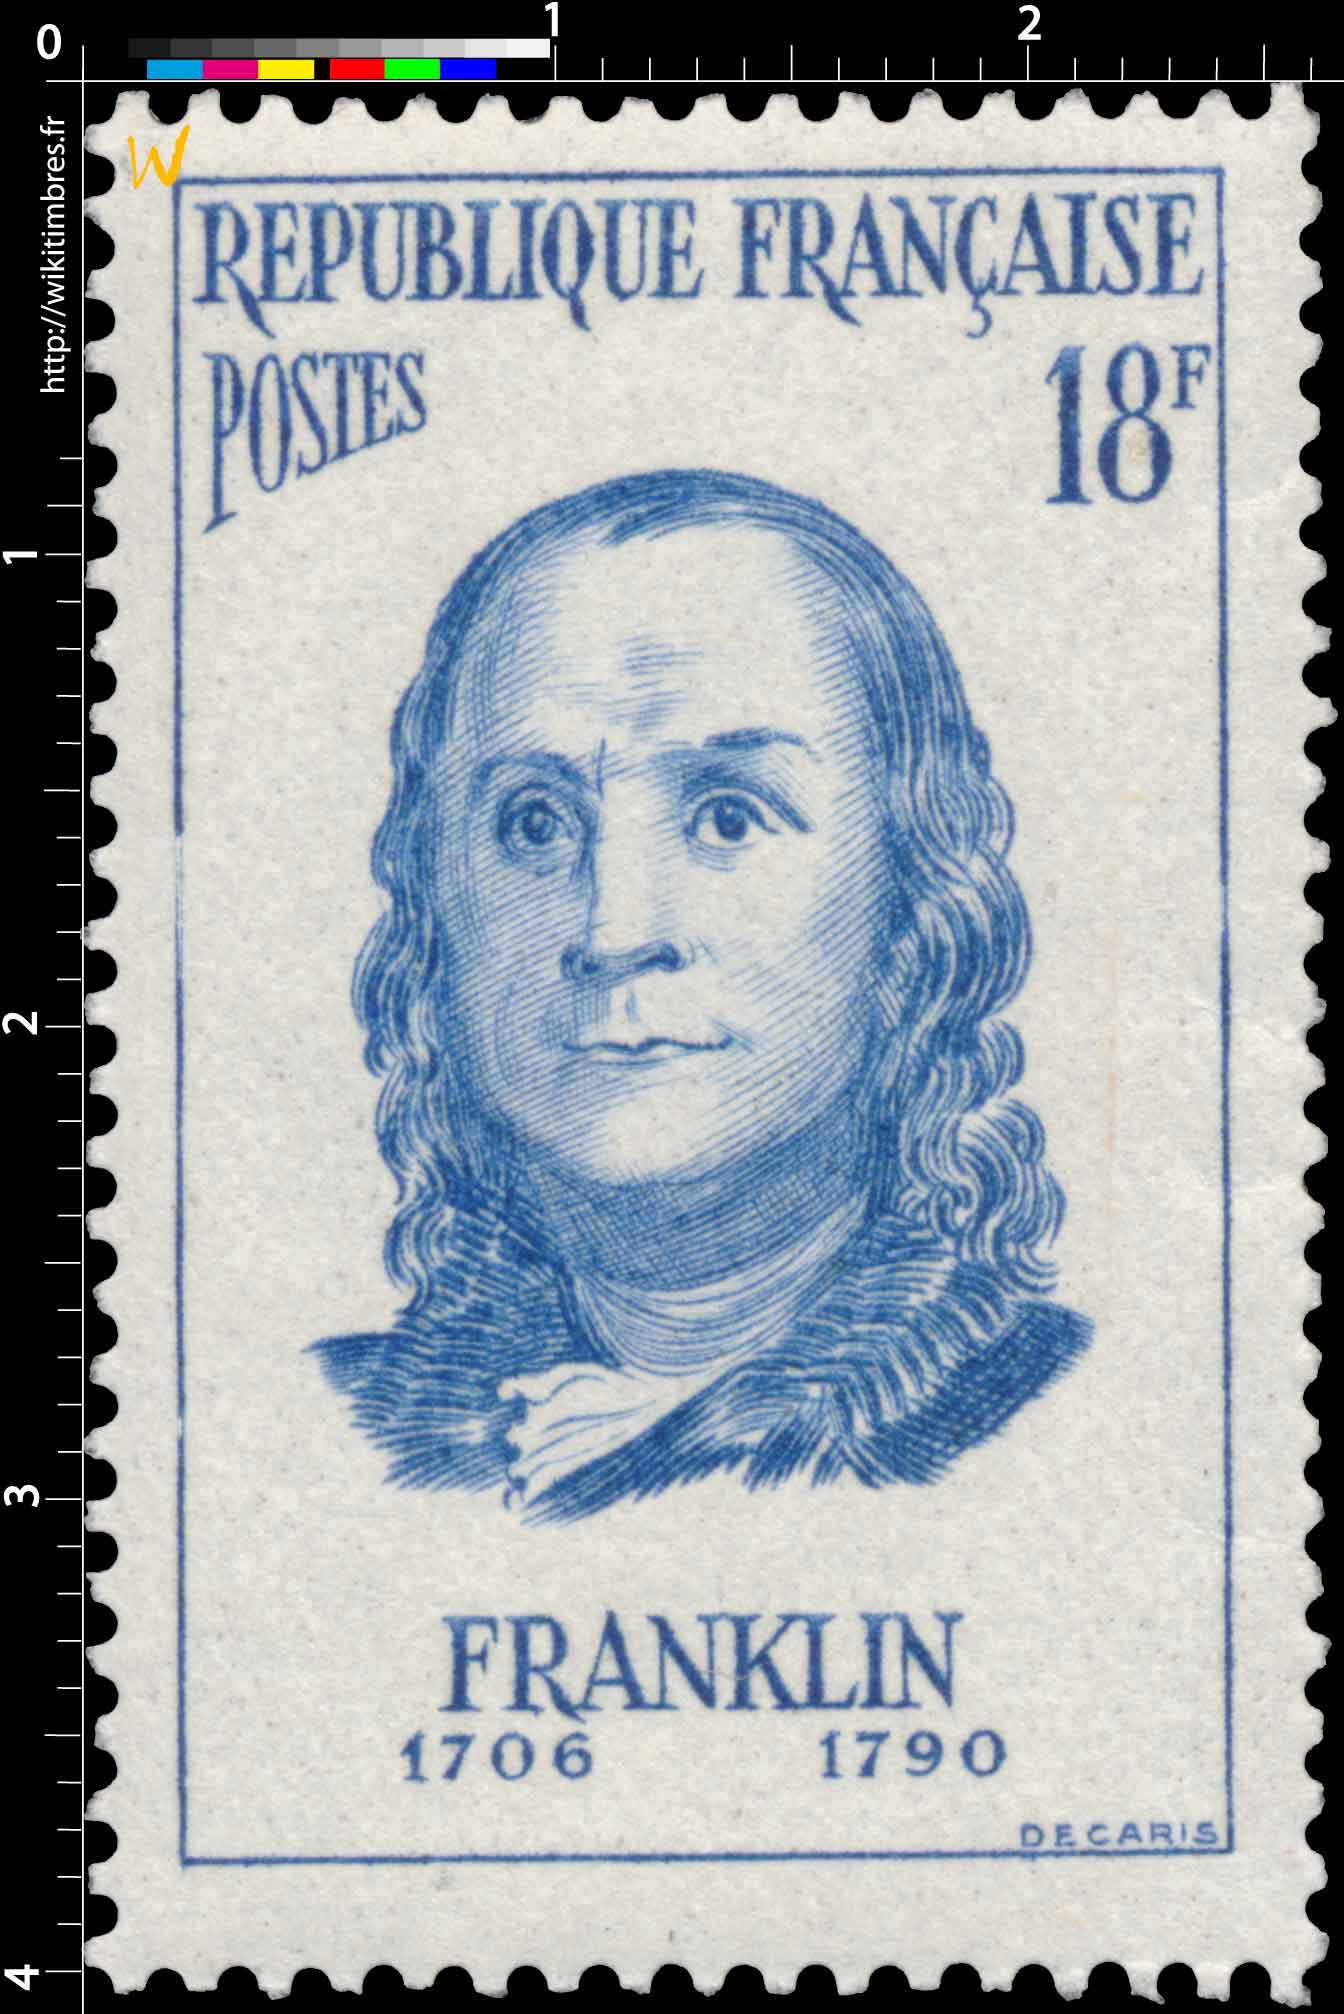 FRANKLIN 1706-1790